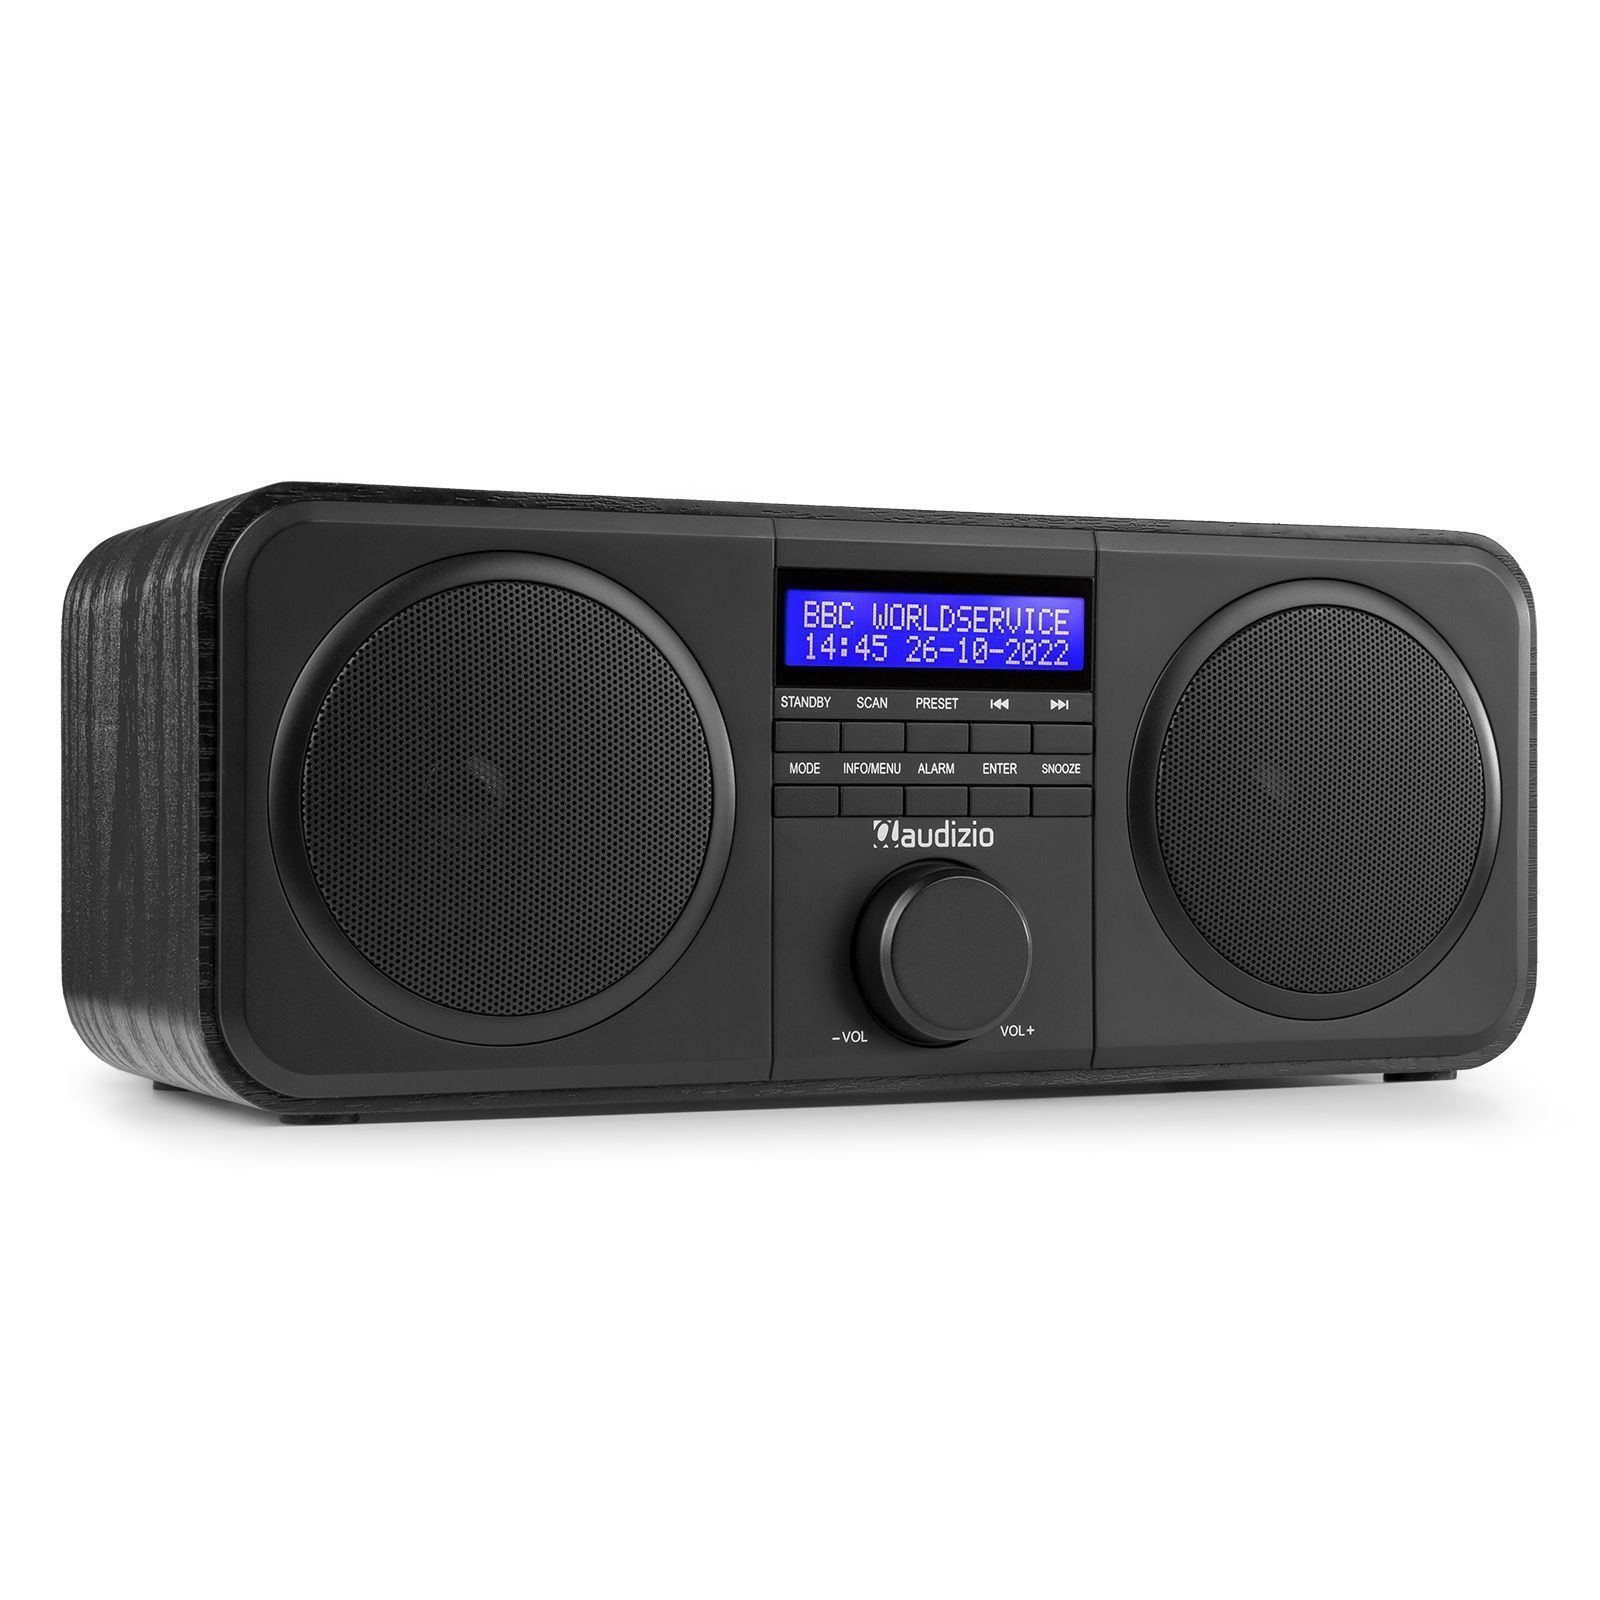 Achternaam Oppositie Kwelling Audizio Novara stereo FM en DAB radio - 40W - Zwart kopen?